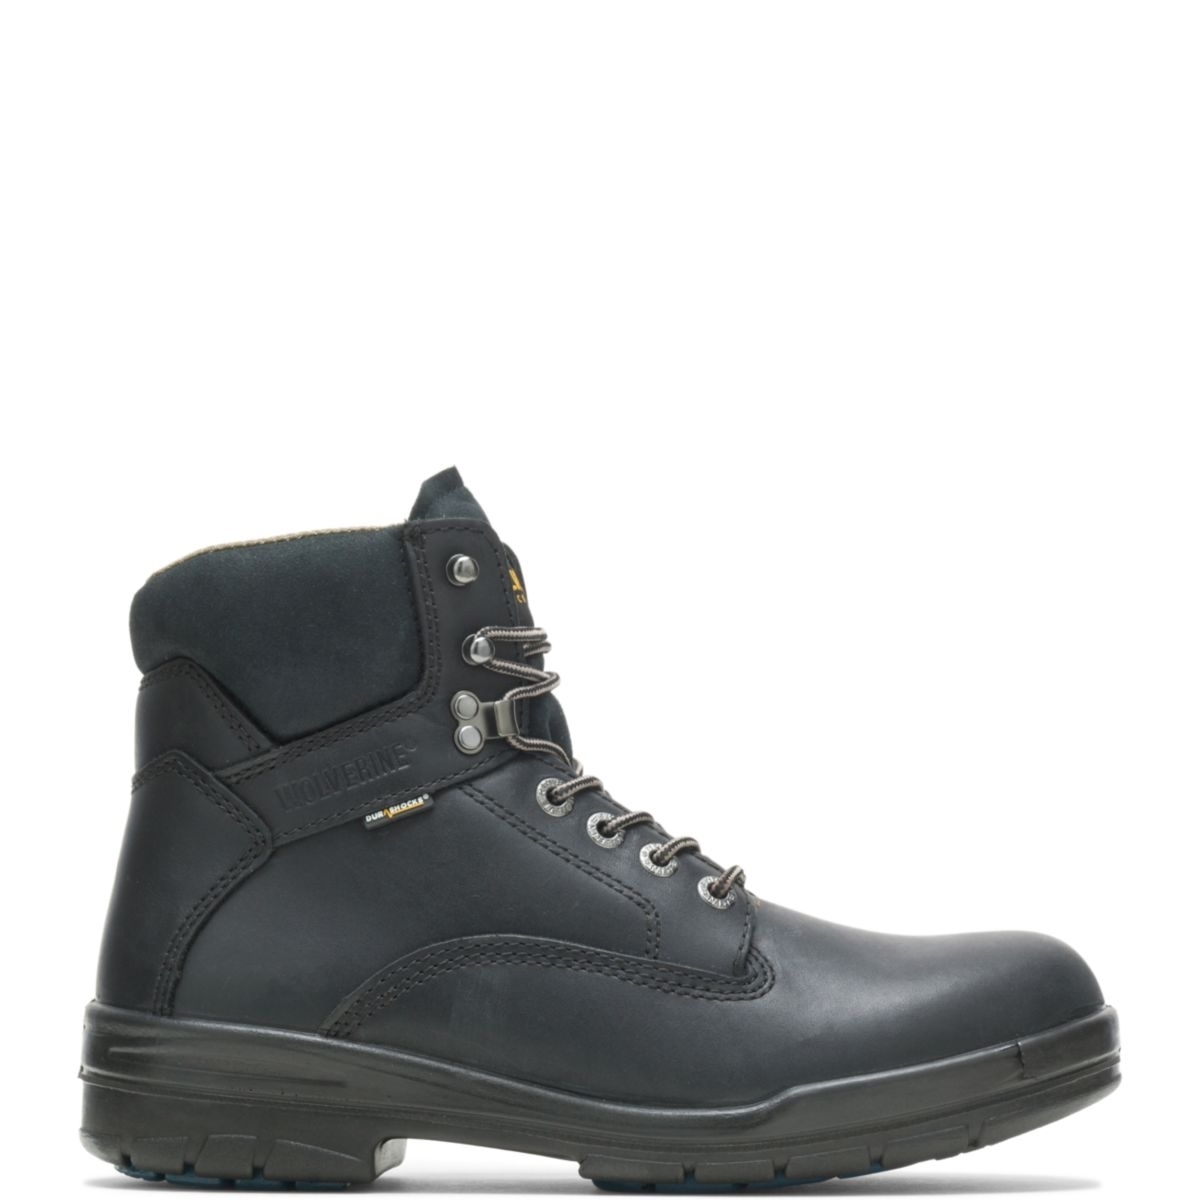 WOLVERINE Men's 6 DuraShocksÂ® Slip Resistant Direct-Attached Lined Soft Toe Work Boot Black - W03123 14 WIDE BLACK - BLACK, 9.5 Wide